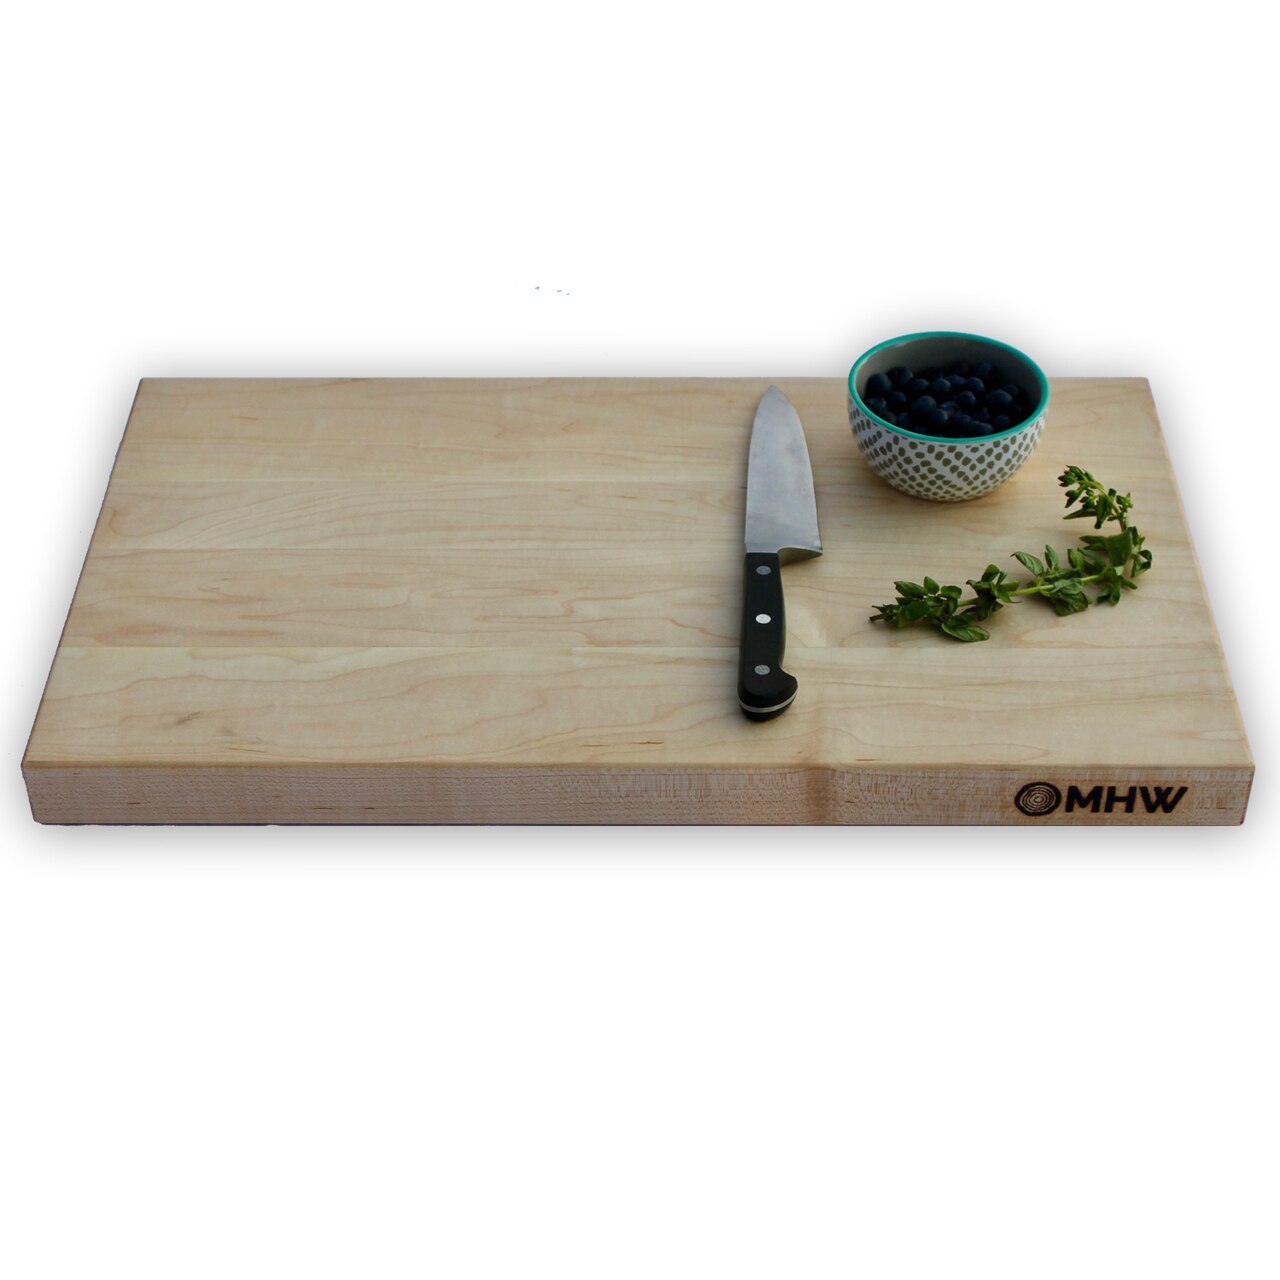 https://www.woodcuttingboardstore.com/wp-content/uploads/2020/06/18x20-Maple-Wood-Cutting-Board-wFREE-Board-Butter1.jpg